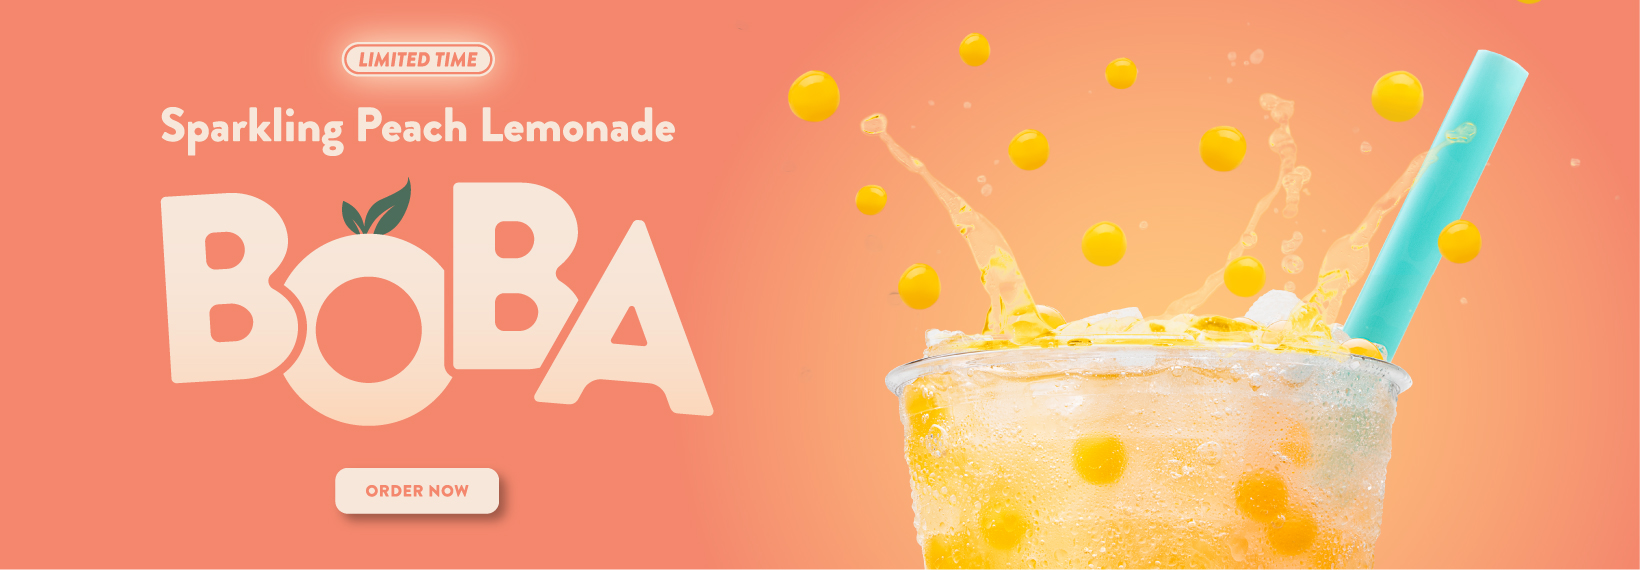 image of the sparkling peach lemonade with boba